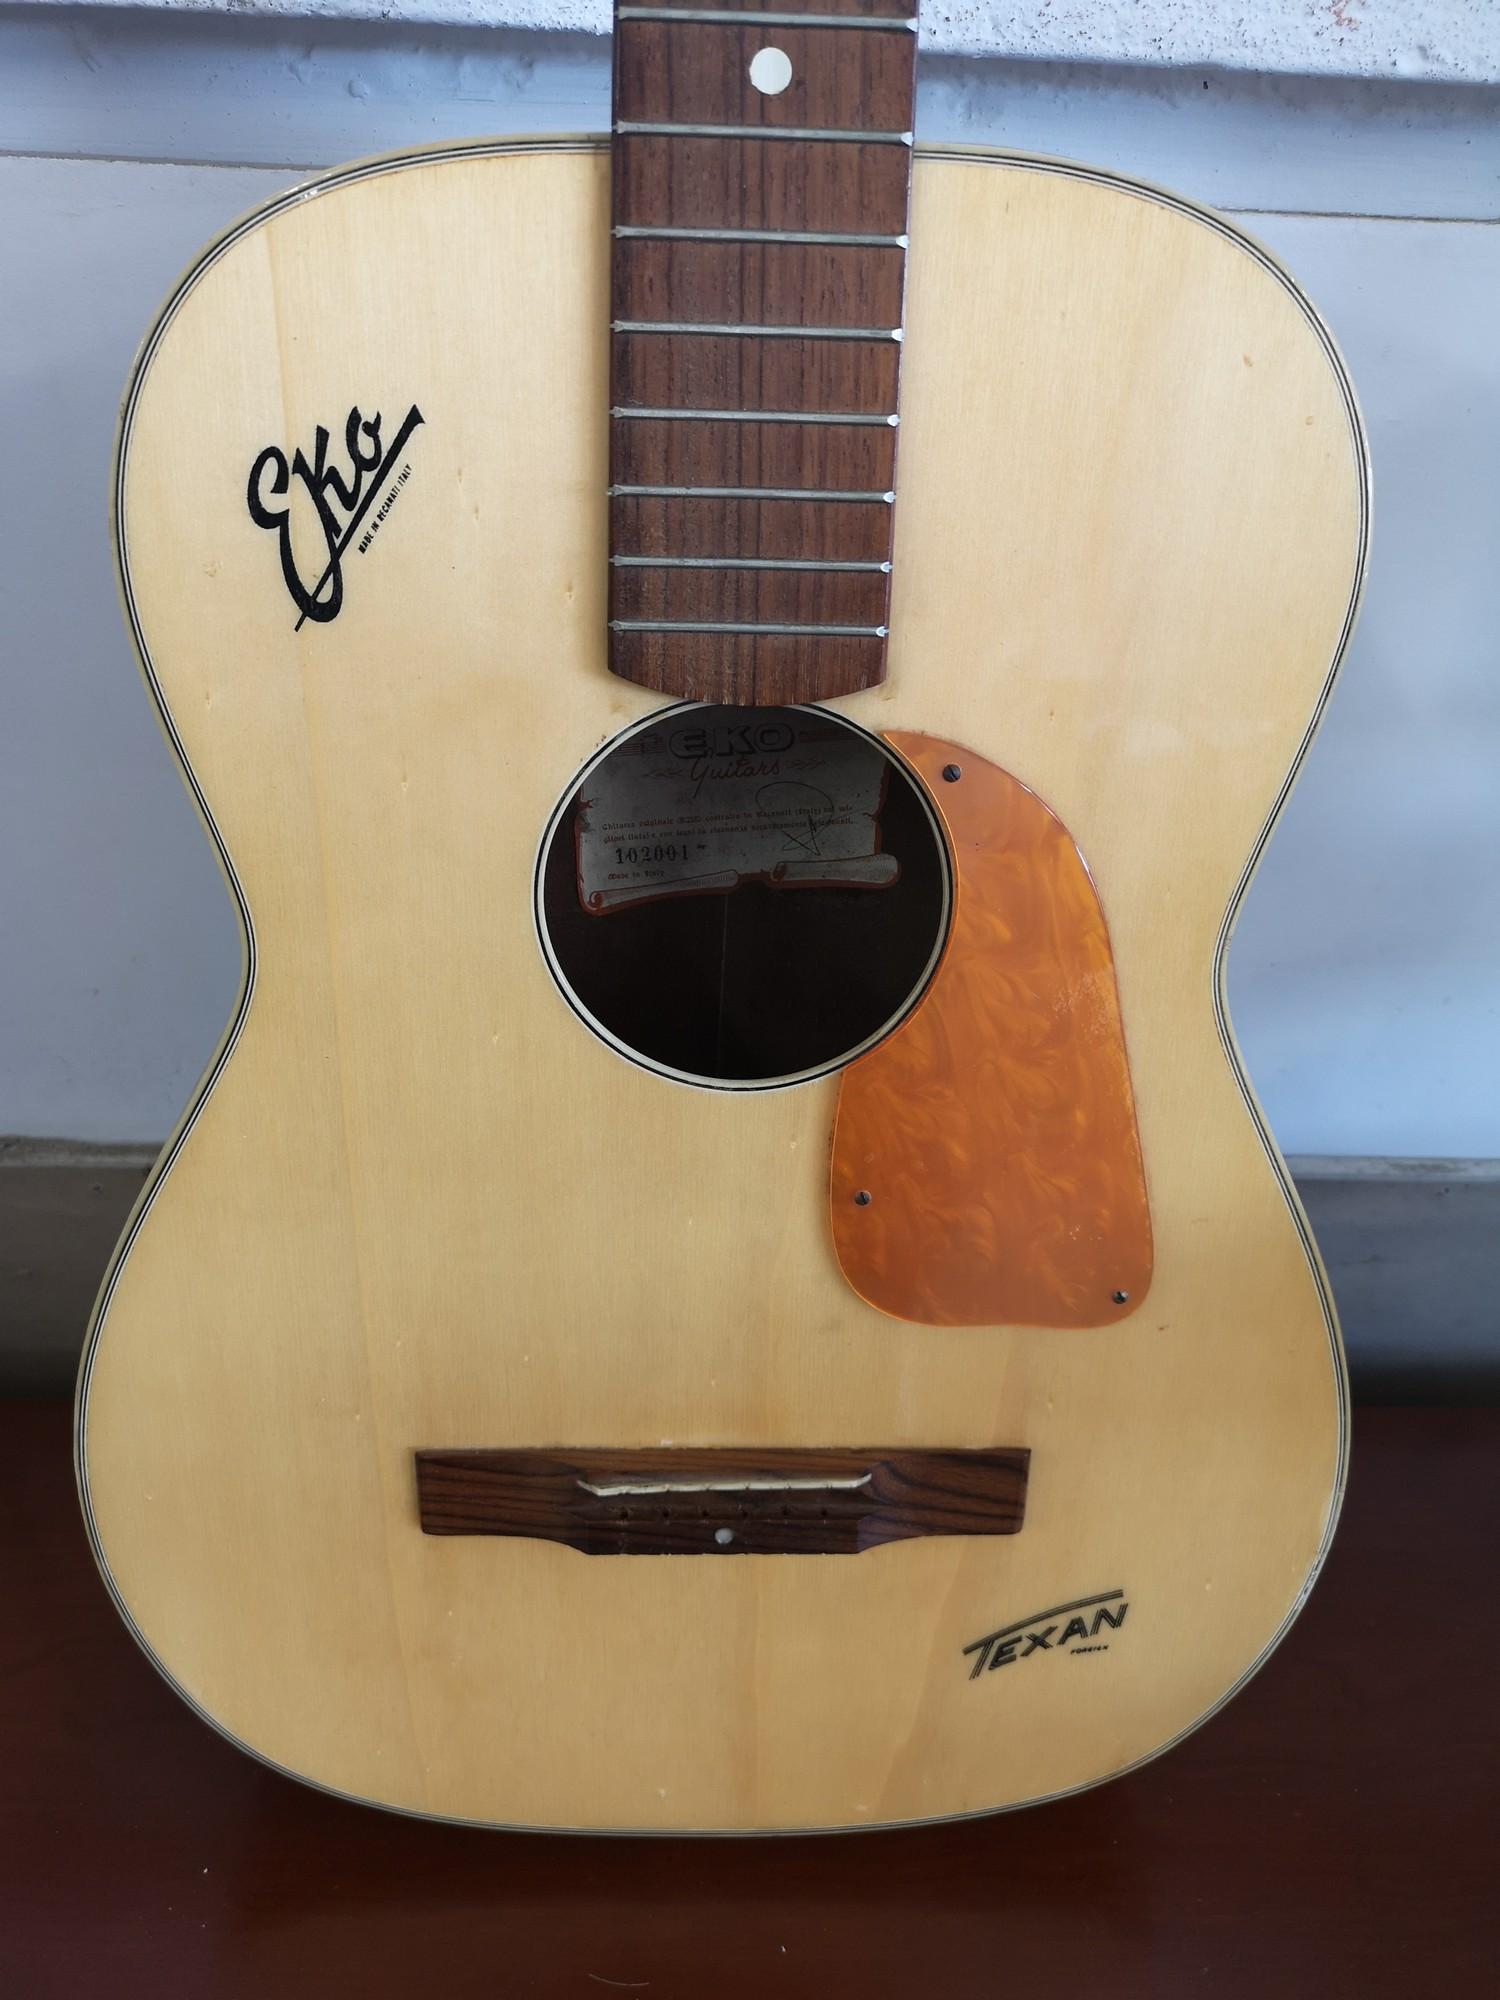 Eko texan acoustic guitar 102001 - Image 2 of 3